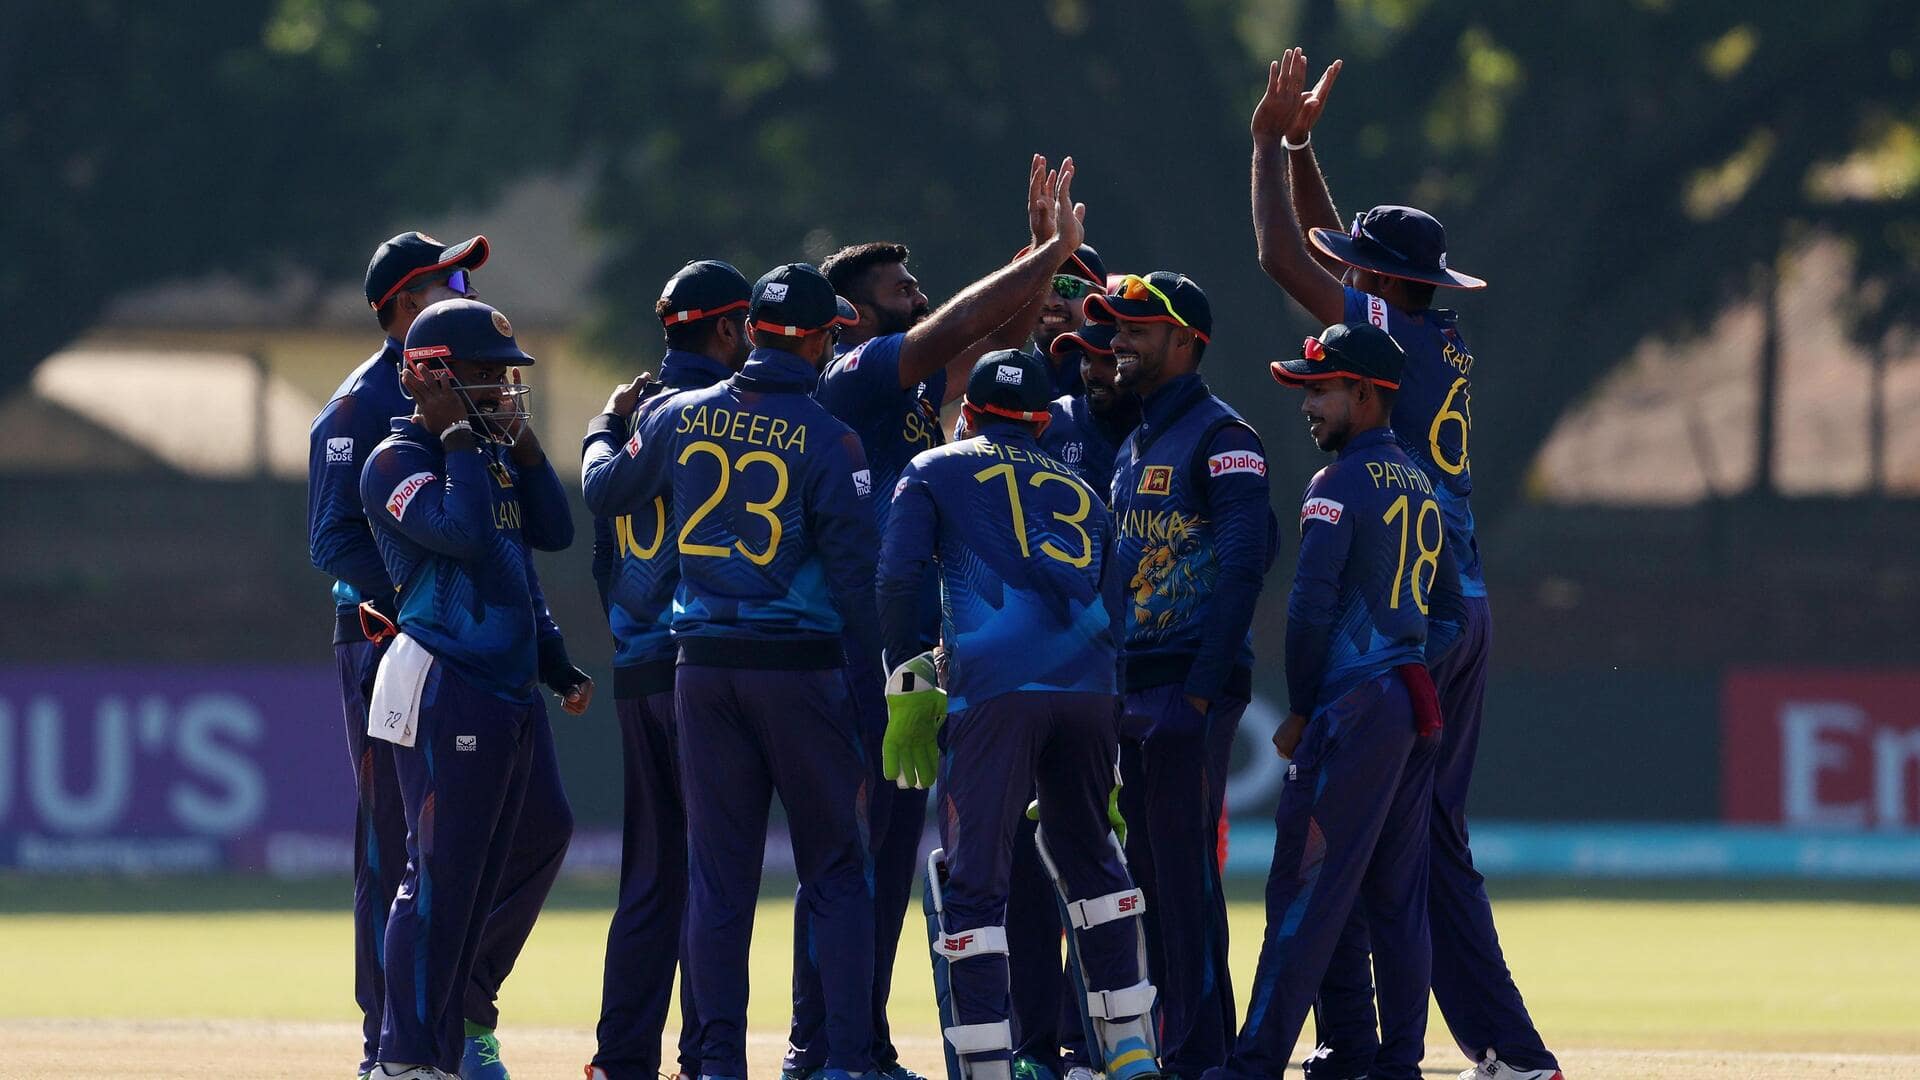 CWC Qualifiers, Sri Lanka blank Oman by 10 wickets: Stats